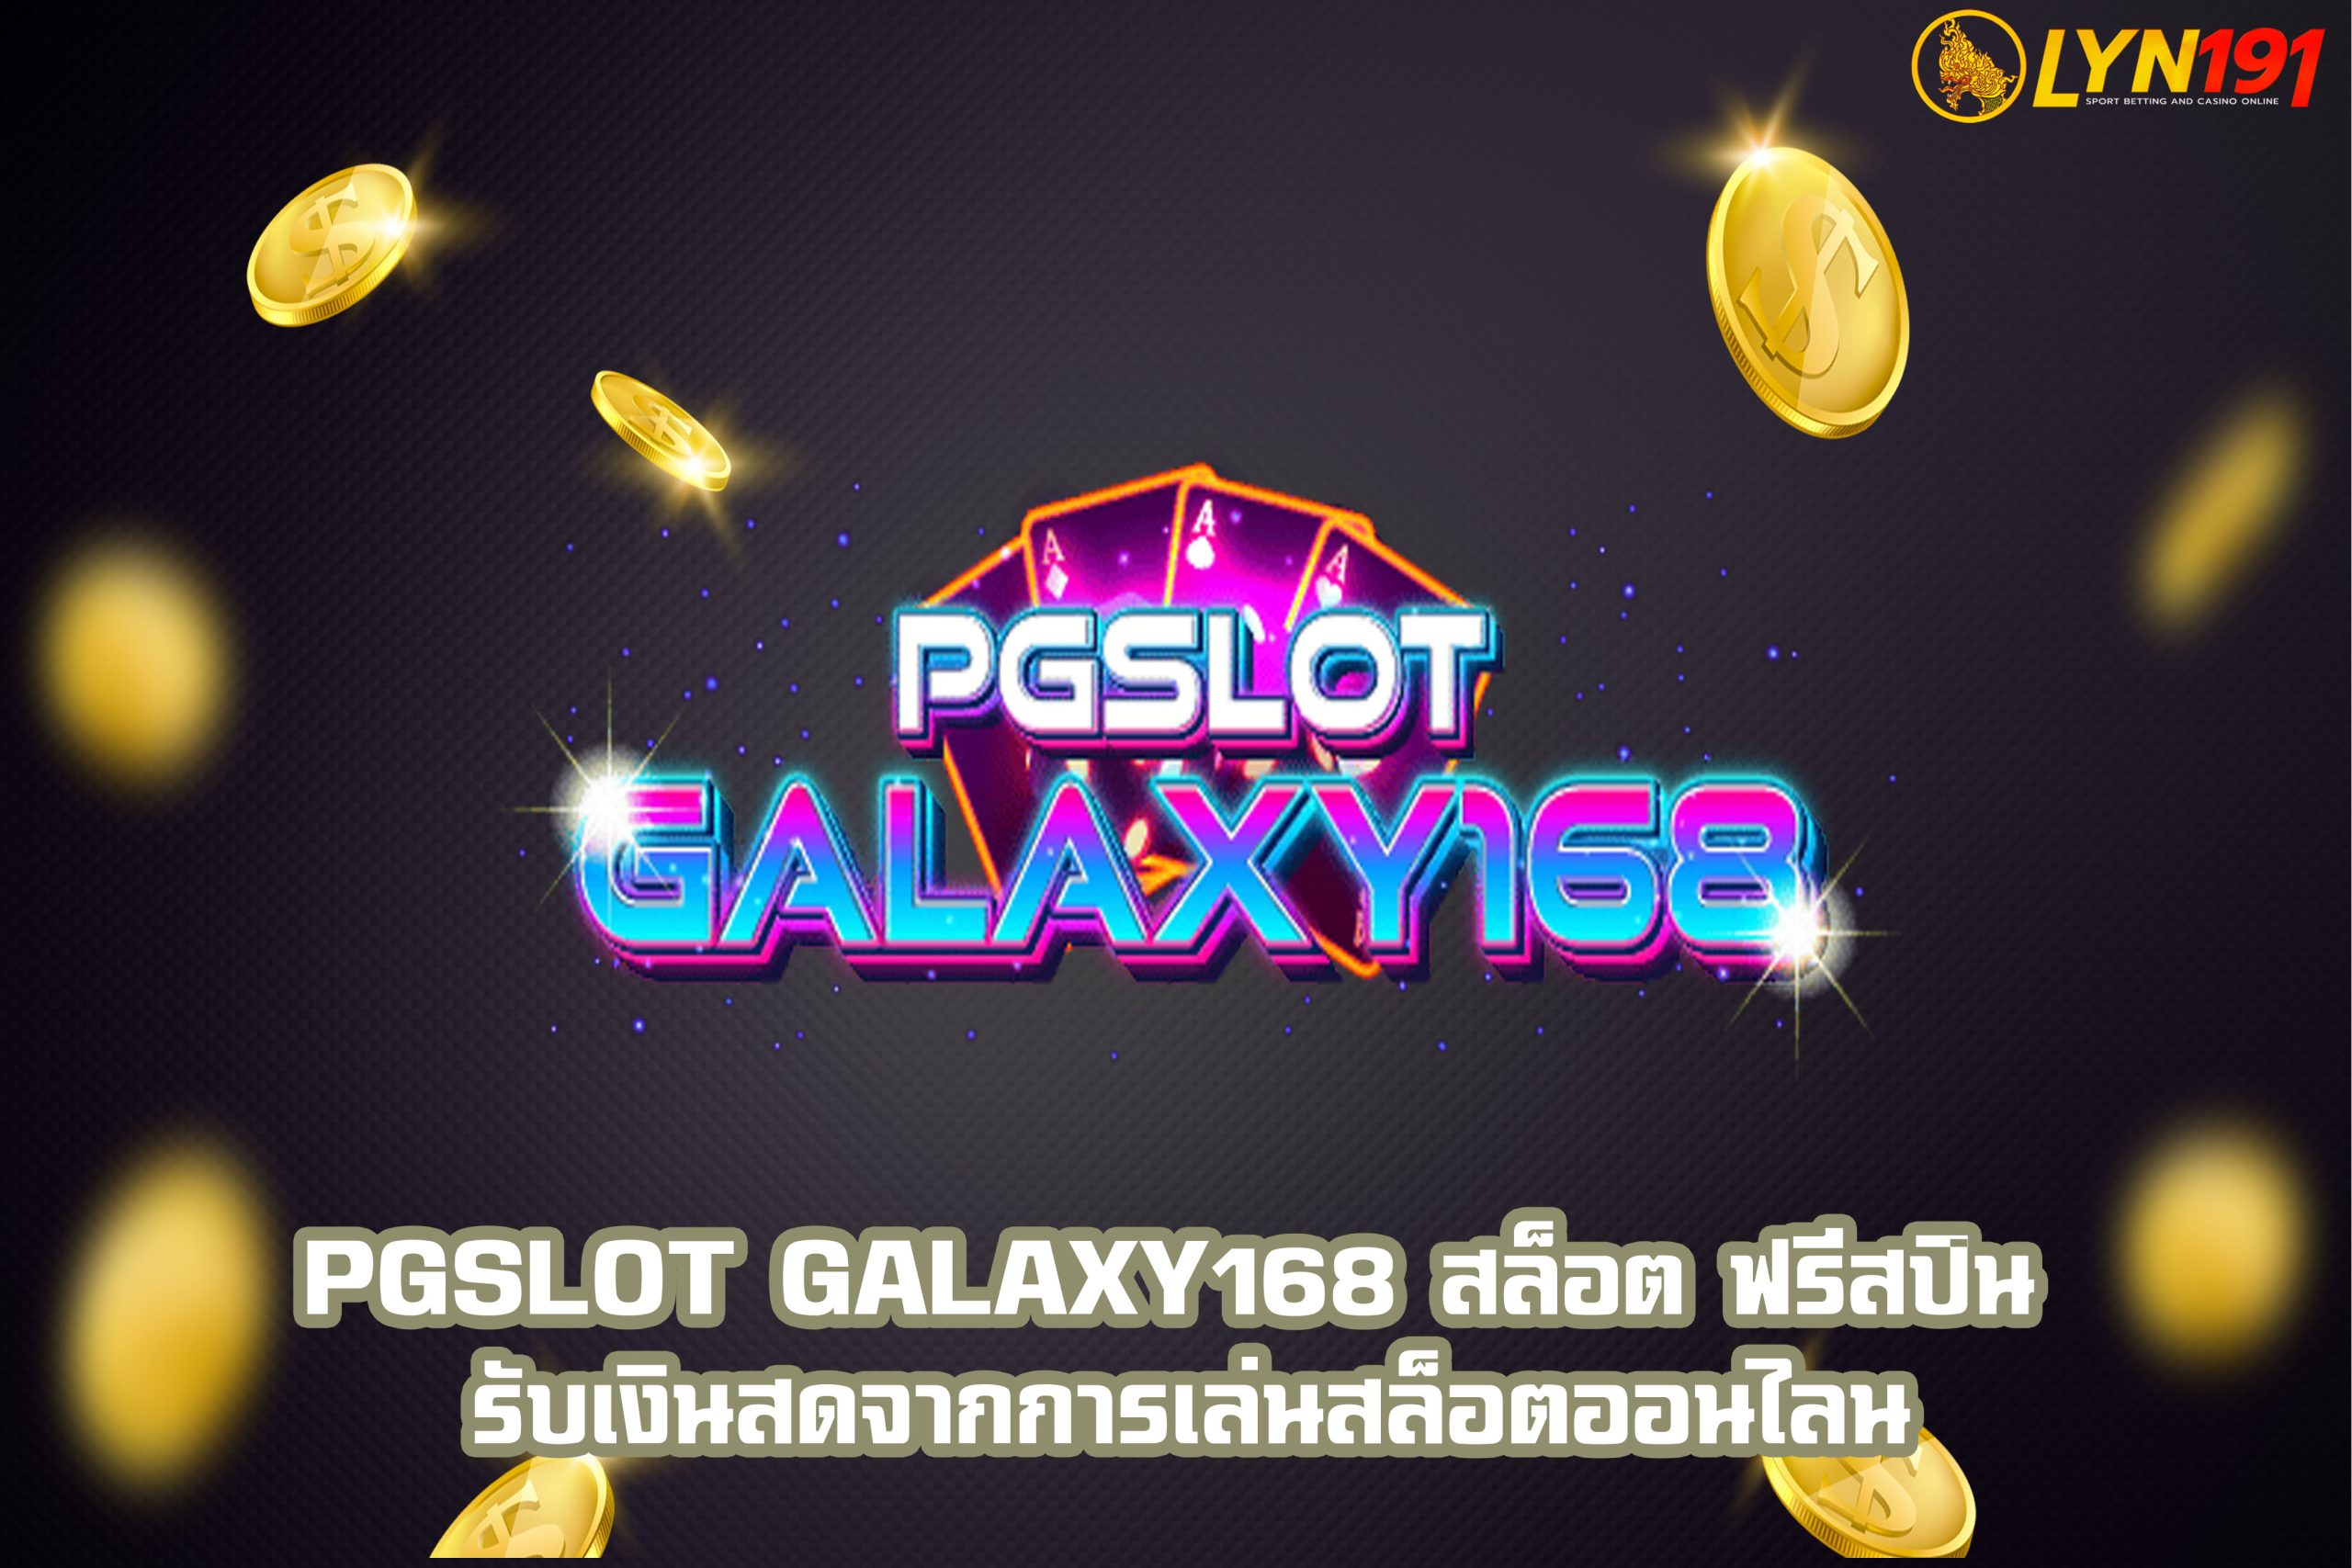 pgslot galaxy168 สล็อต ฟรีสปิน รับเงินสดจากการเล่นสล็อตออนไลน